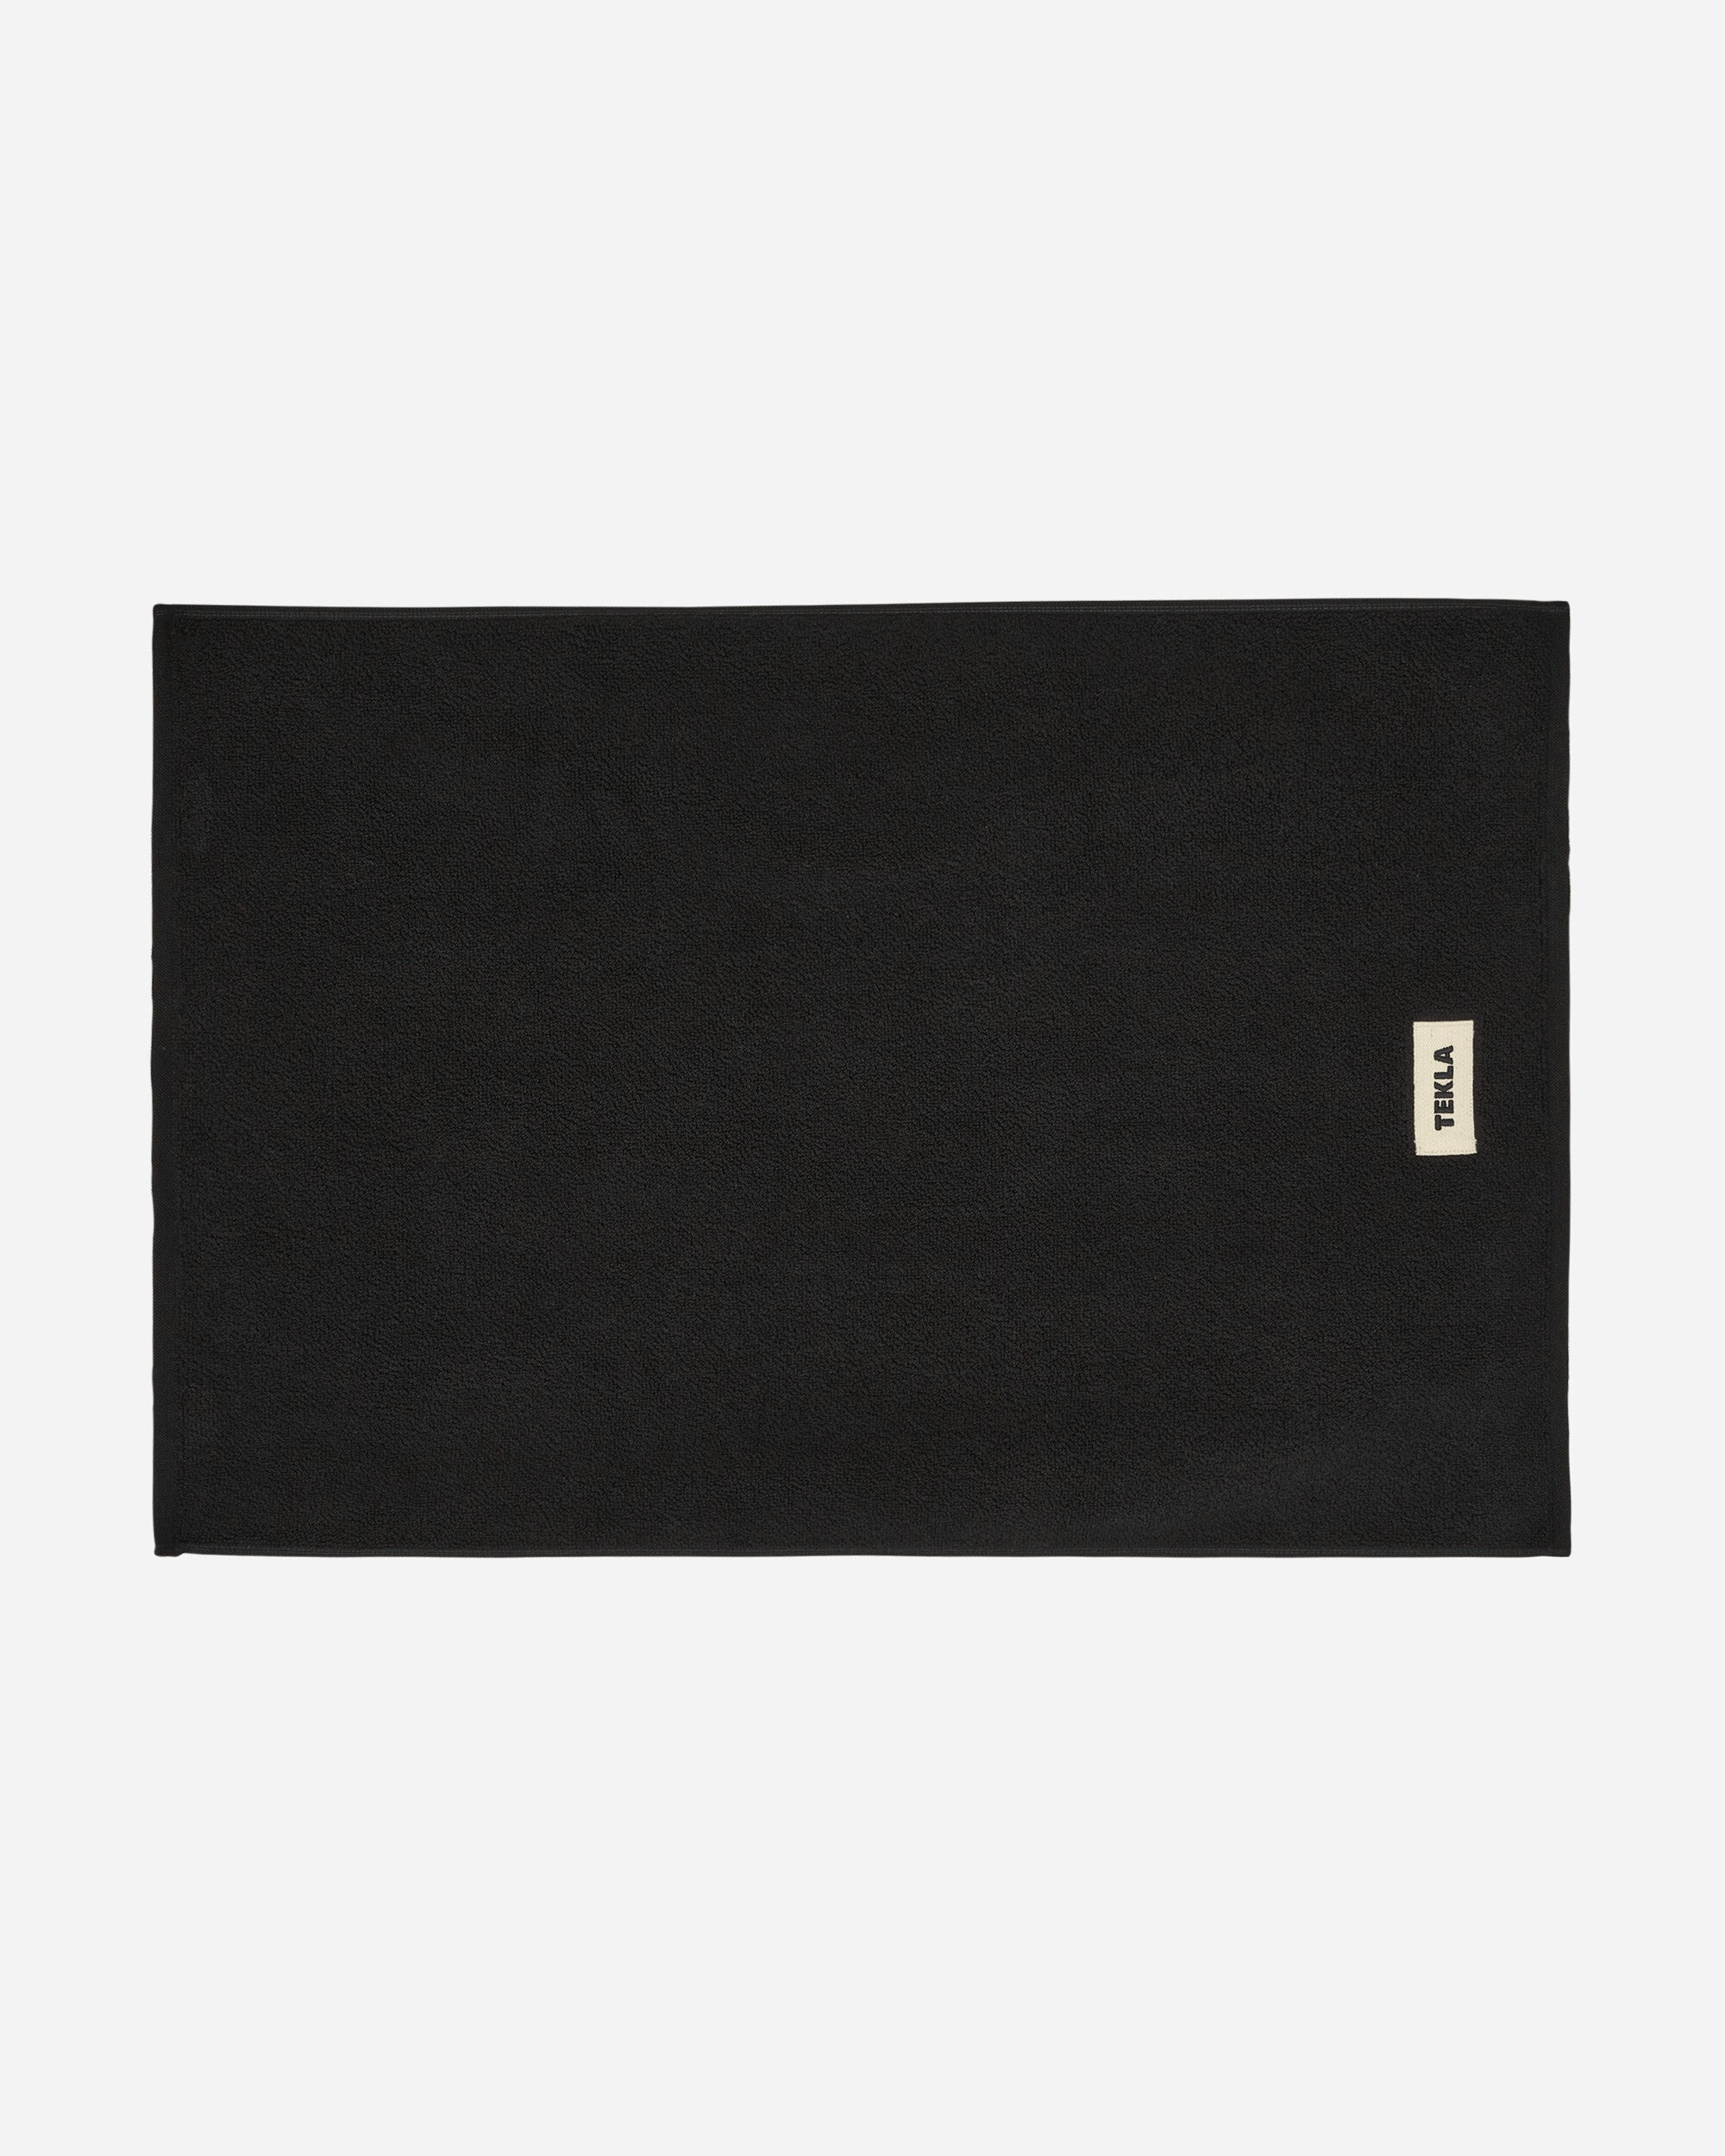 Tekla Bath Mat - Solid Black Textile Bath Towels BM-BL-70x50 BLST